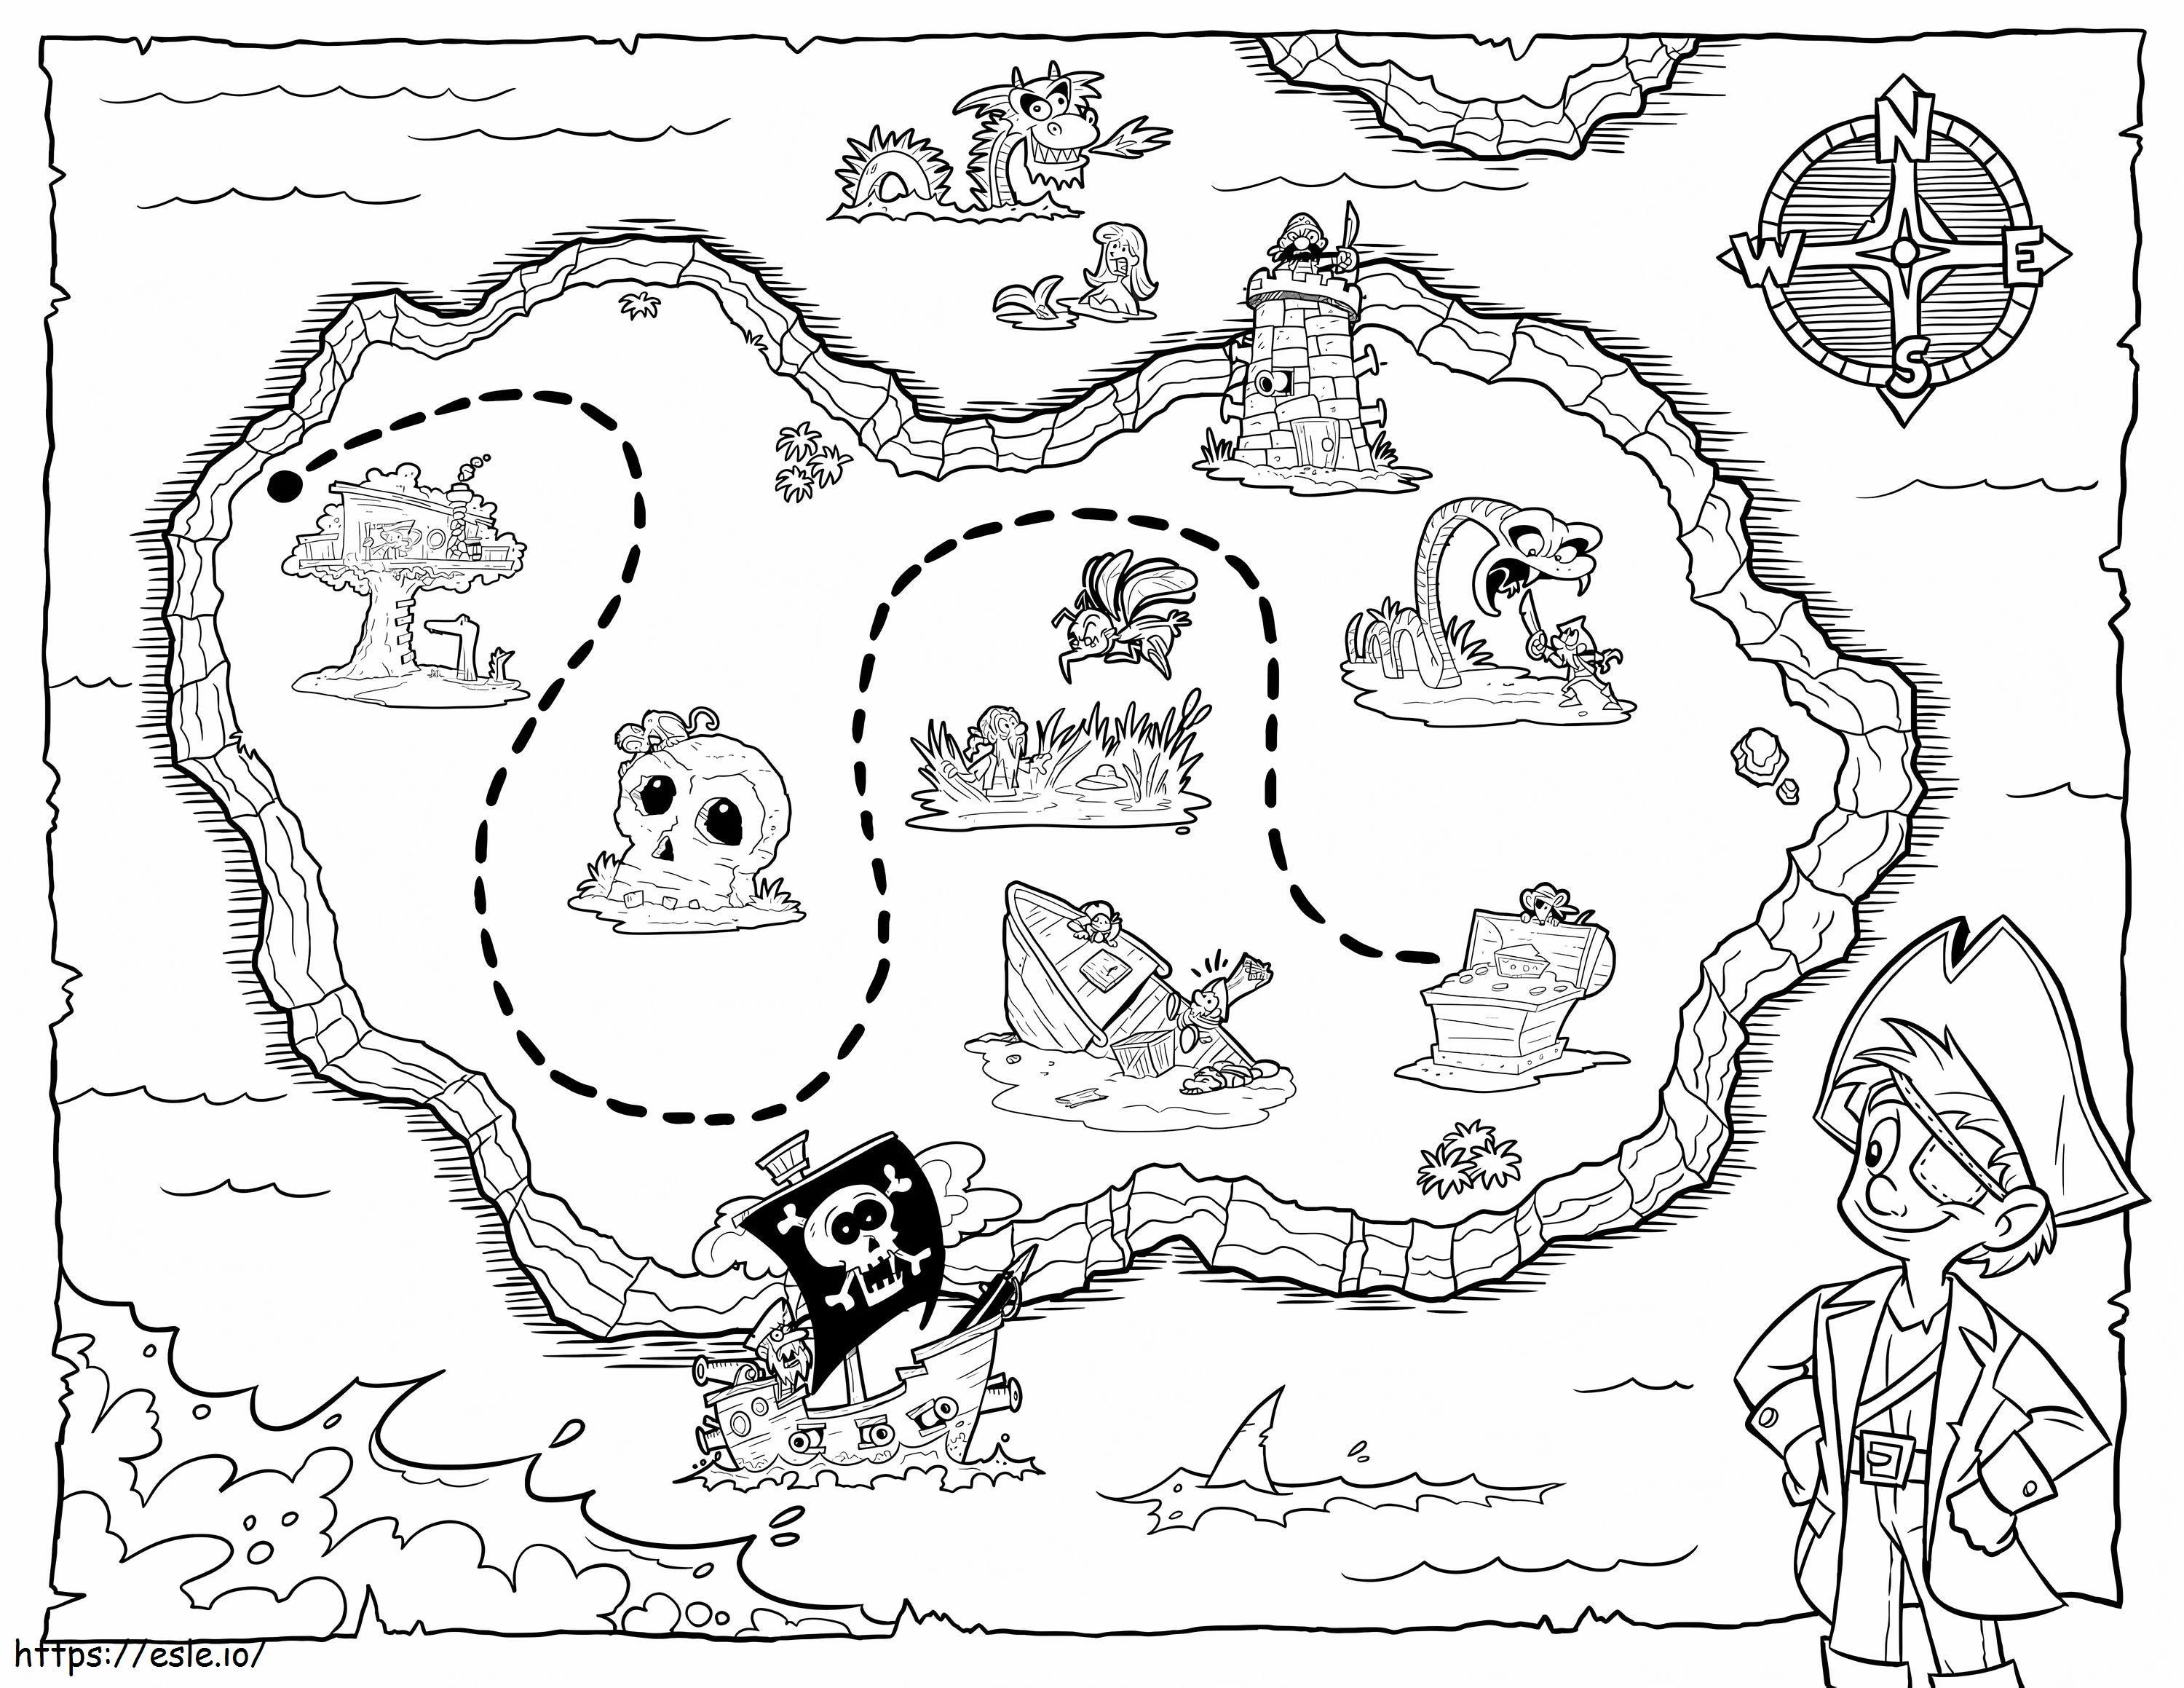 Pirates Treasure Map coloring page